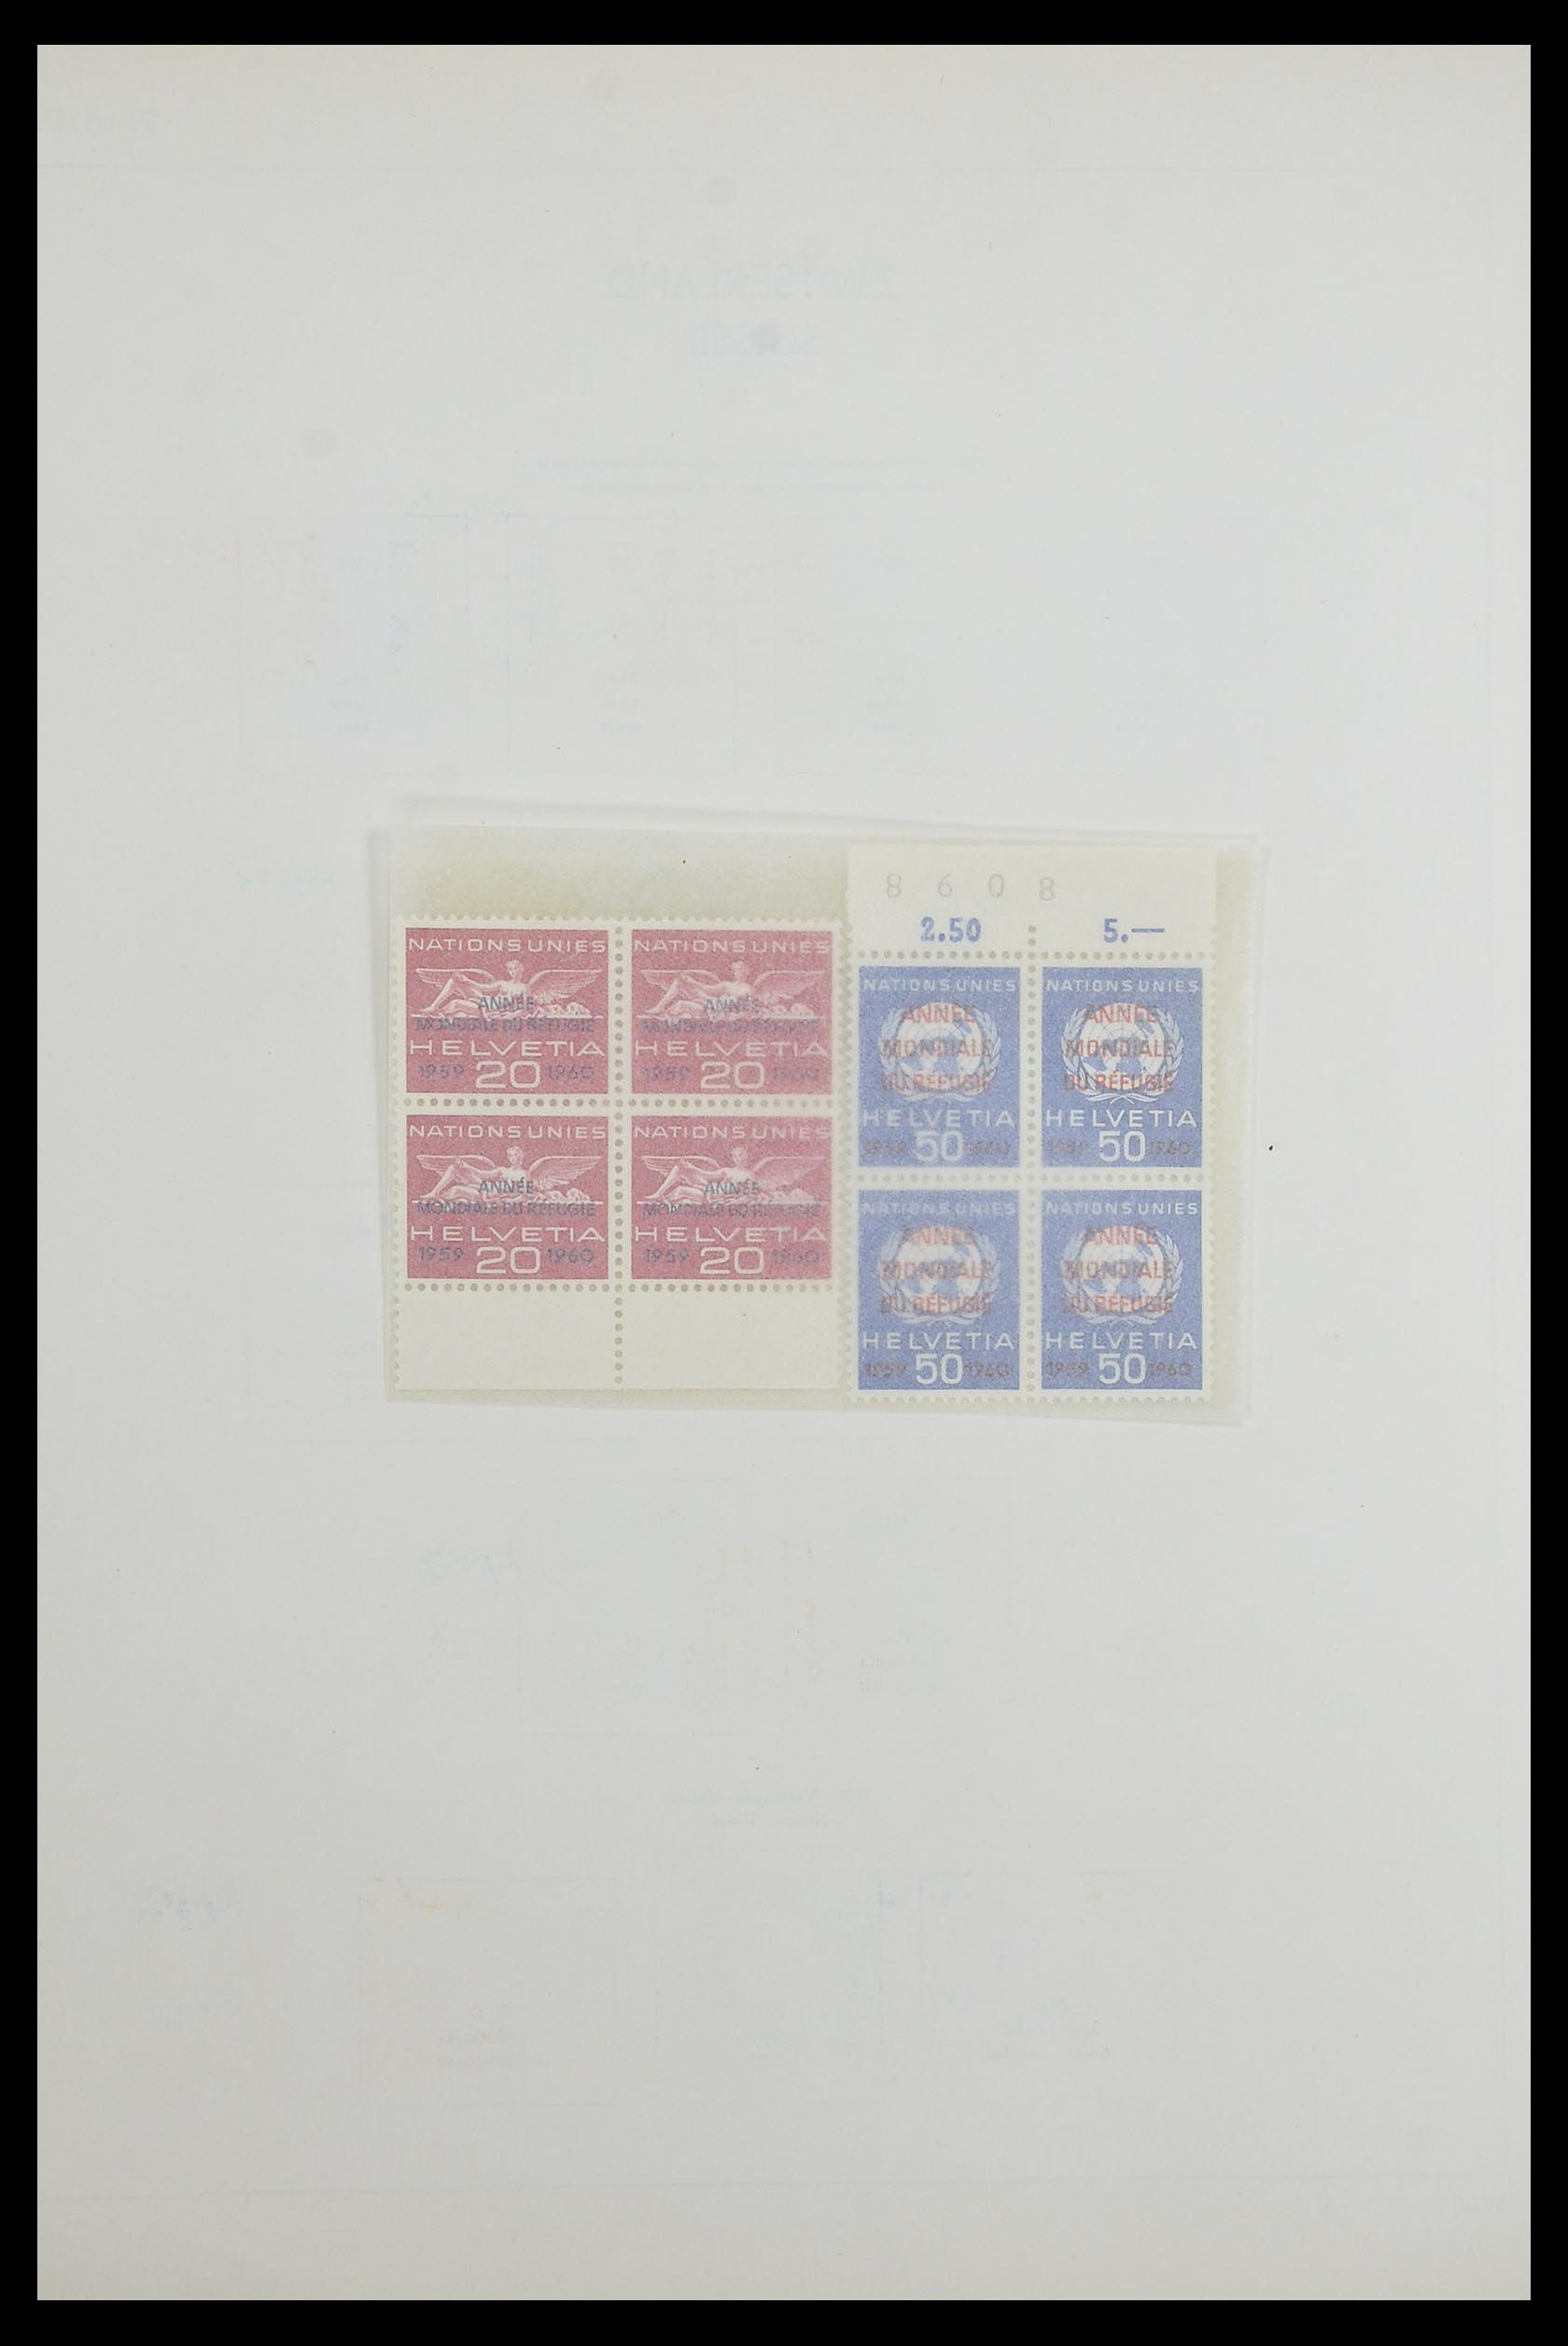 33601 120 - Stamp collection 33601 Switzerland 1854-1985.